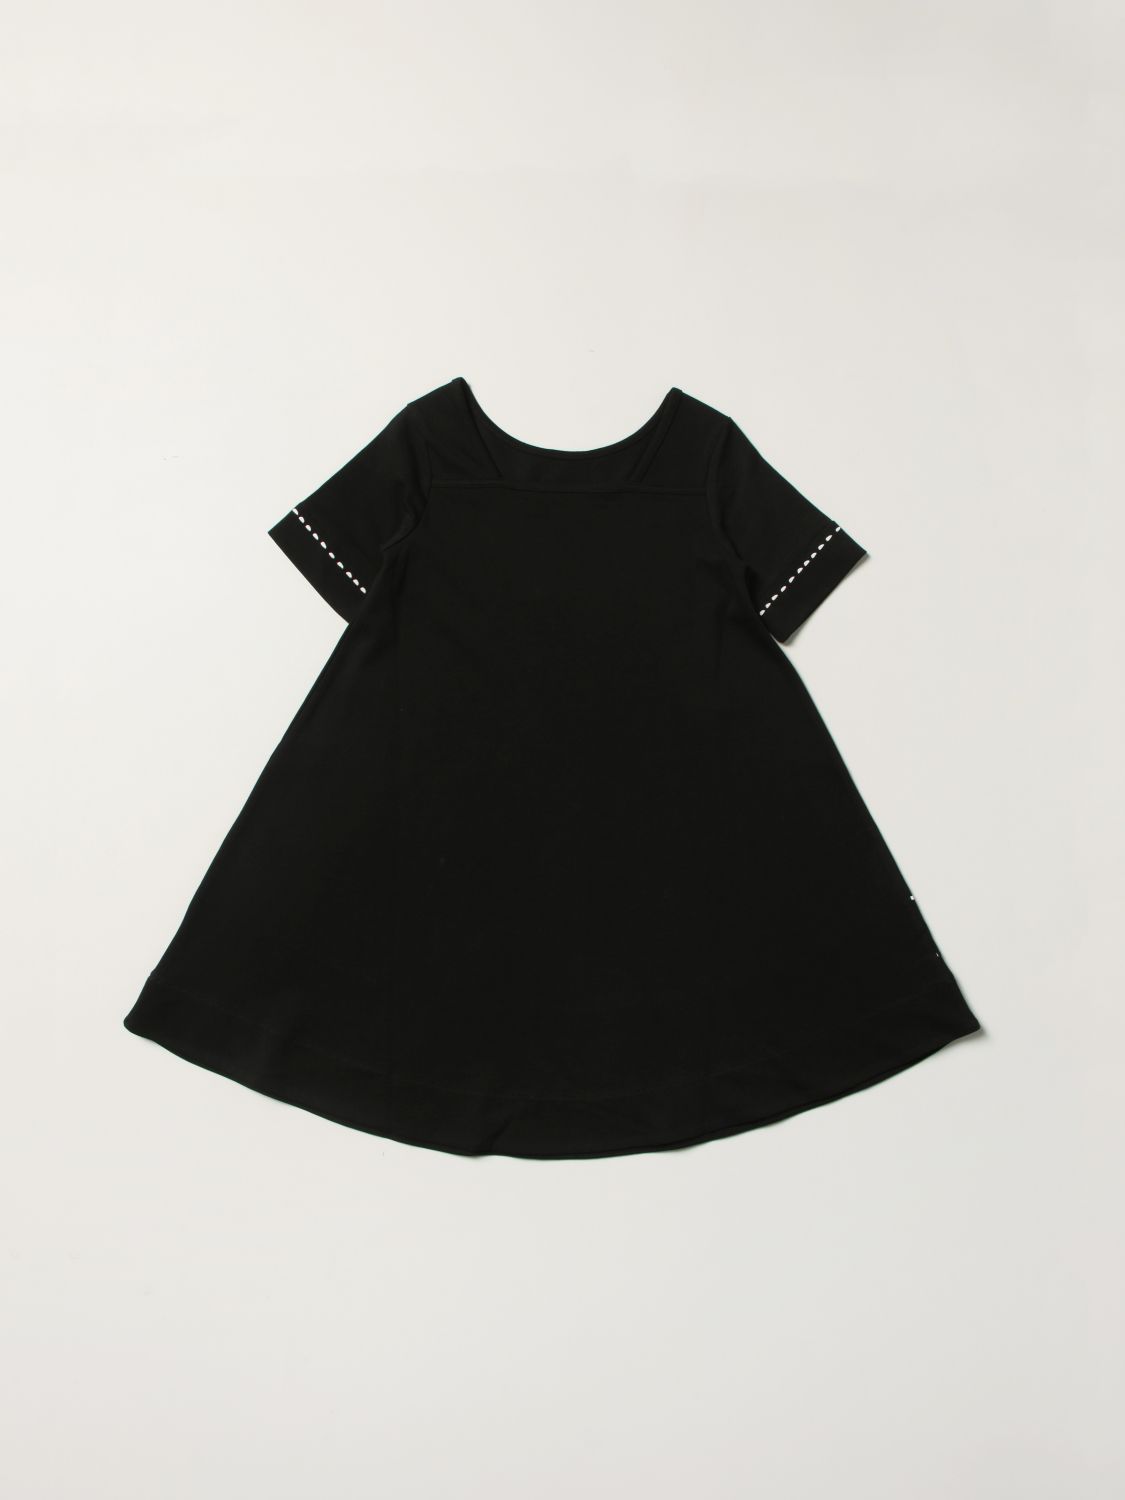 Kleid Emporio Armani: Emporio Armani Mädchen kleid schwarz 2